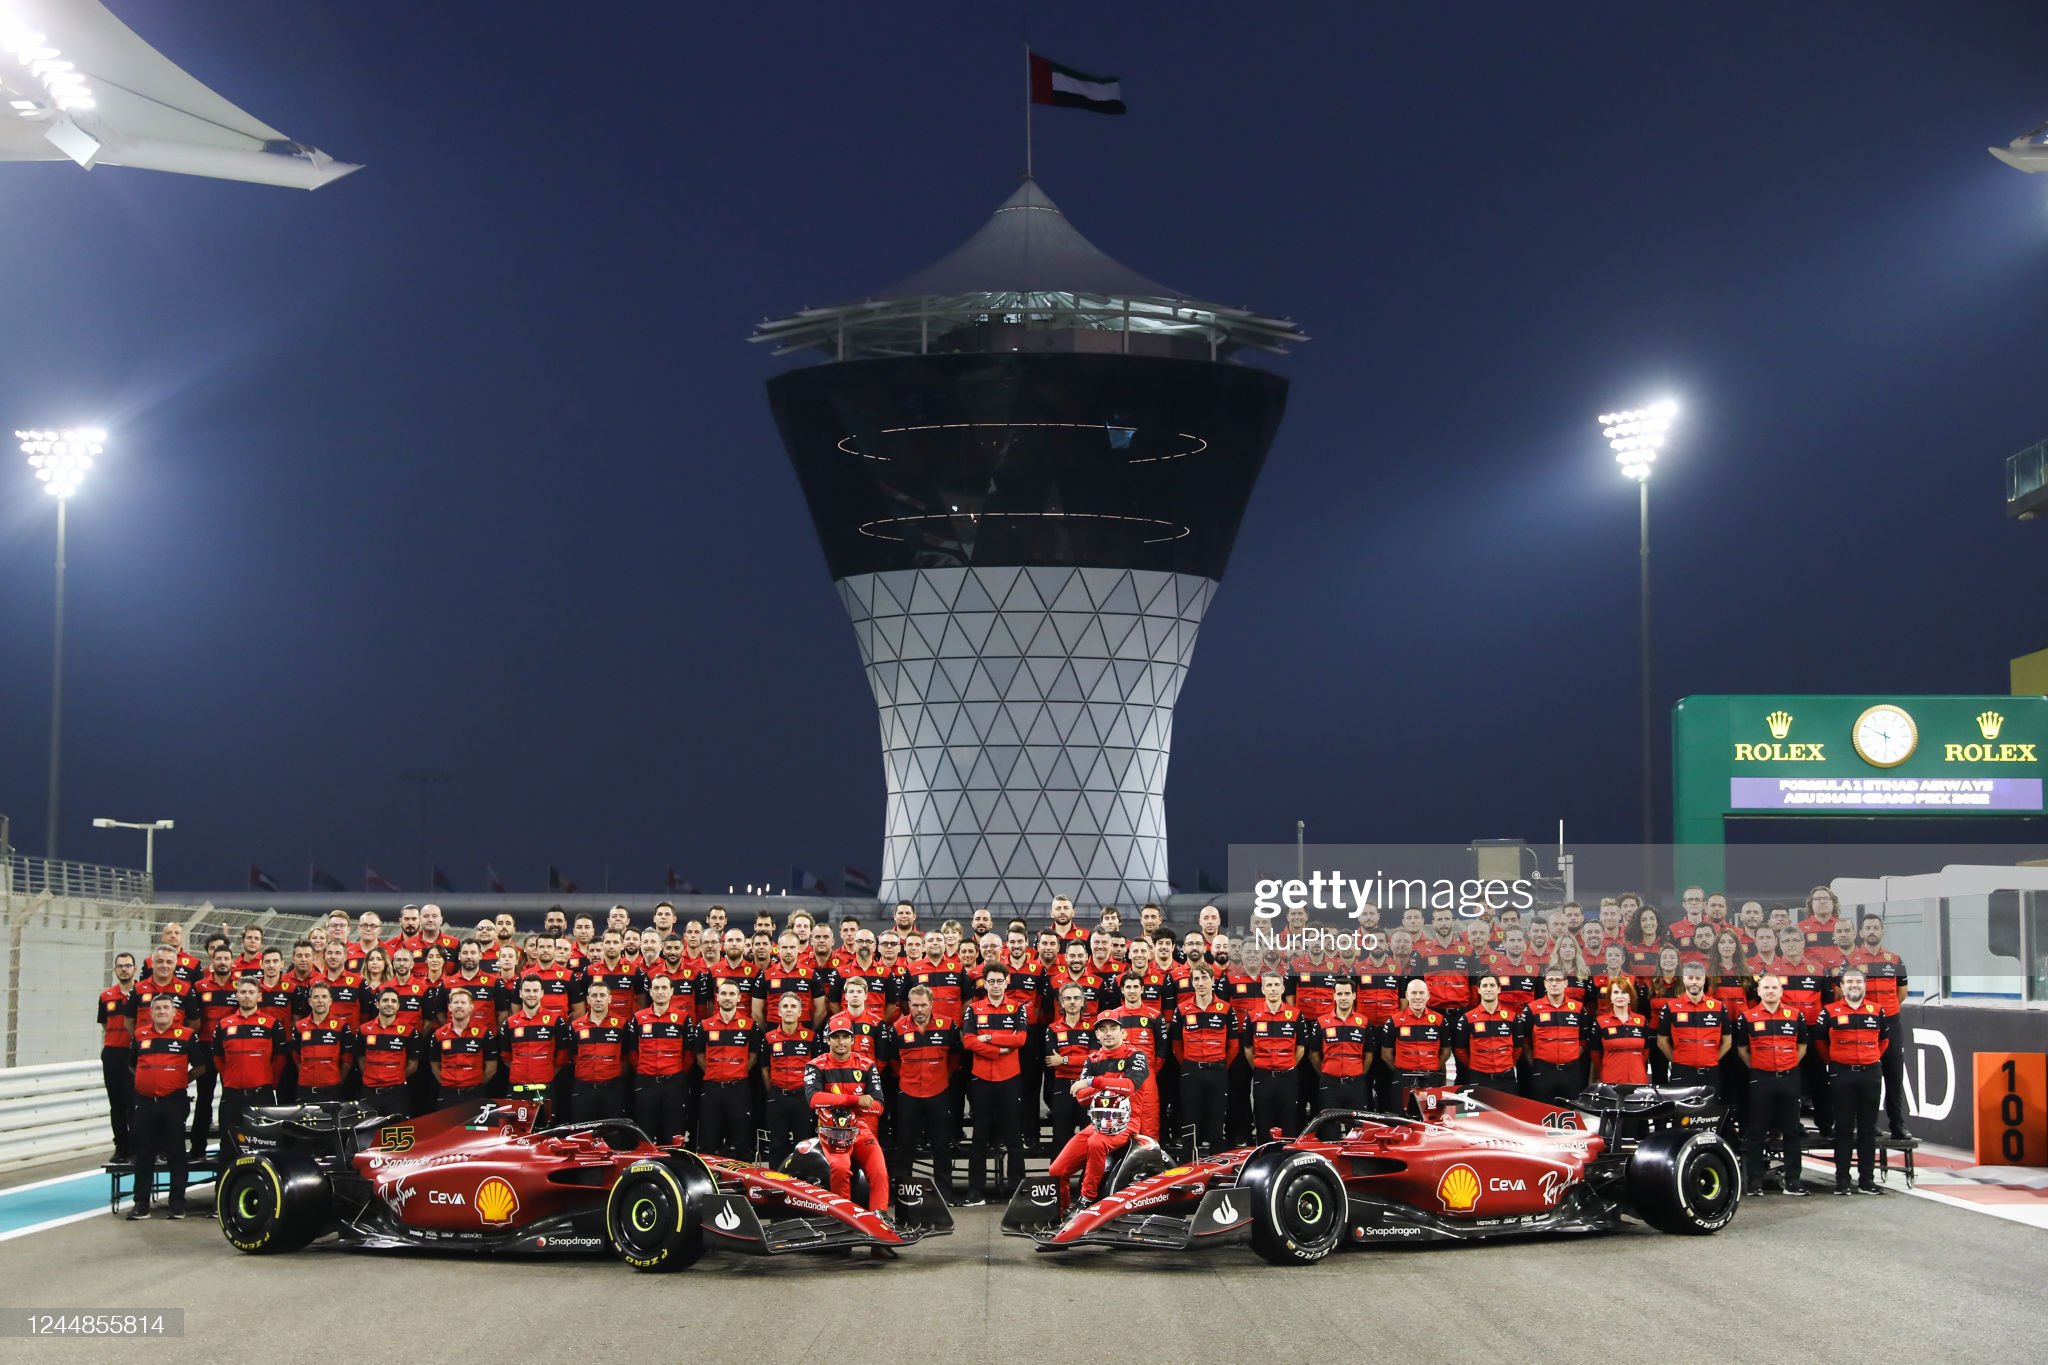 Ferrari team pose for a photo.